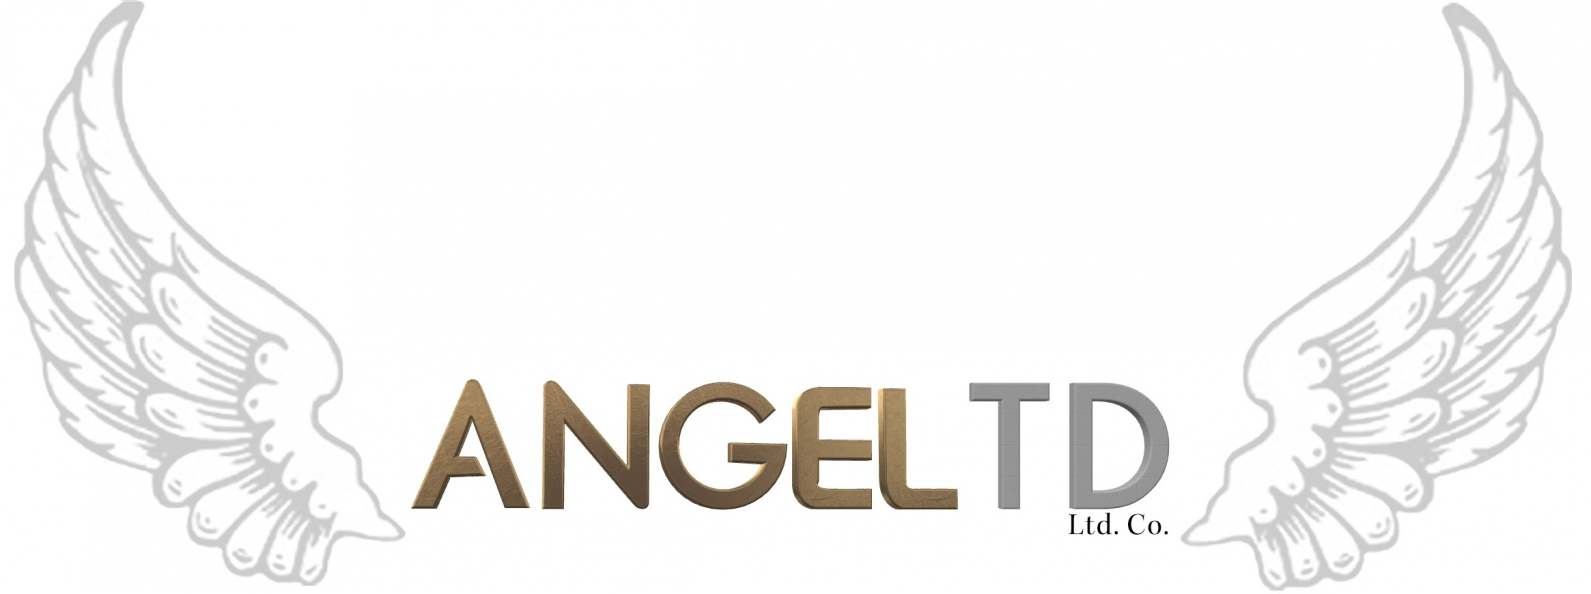 AngelTD Logo